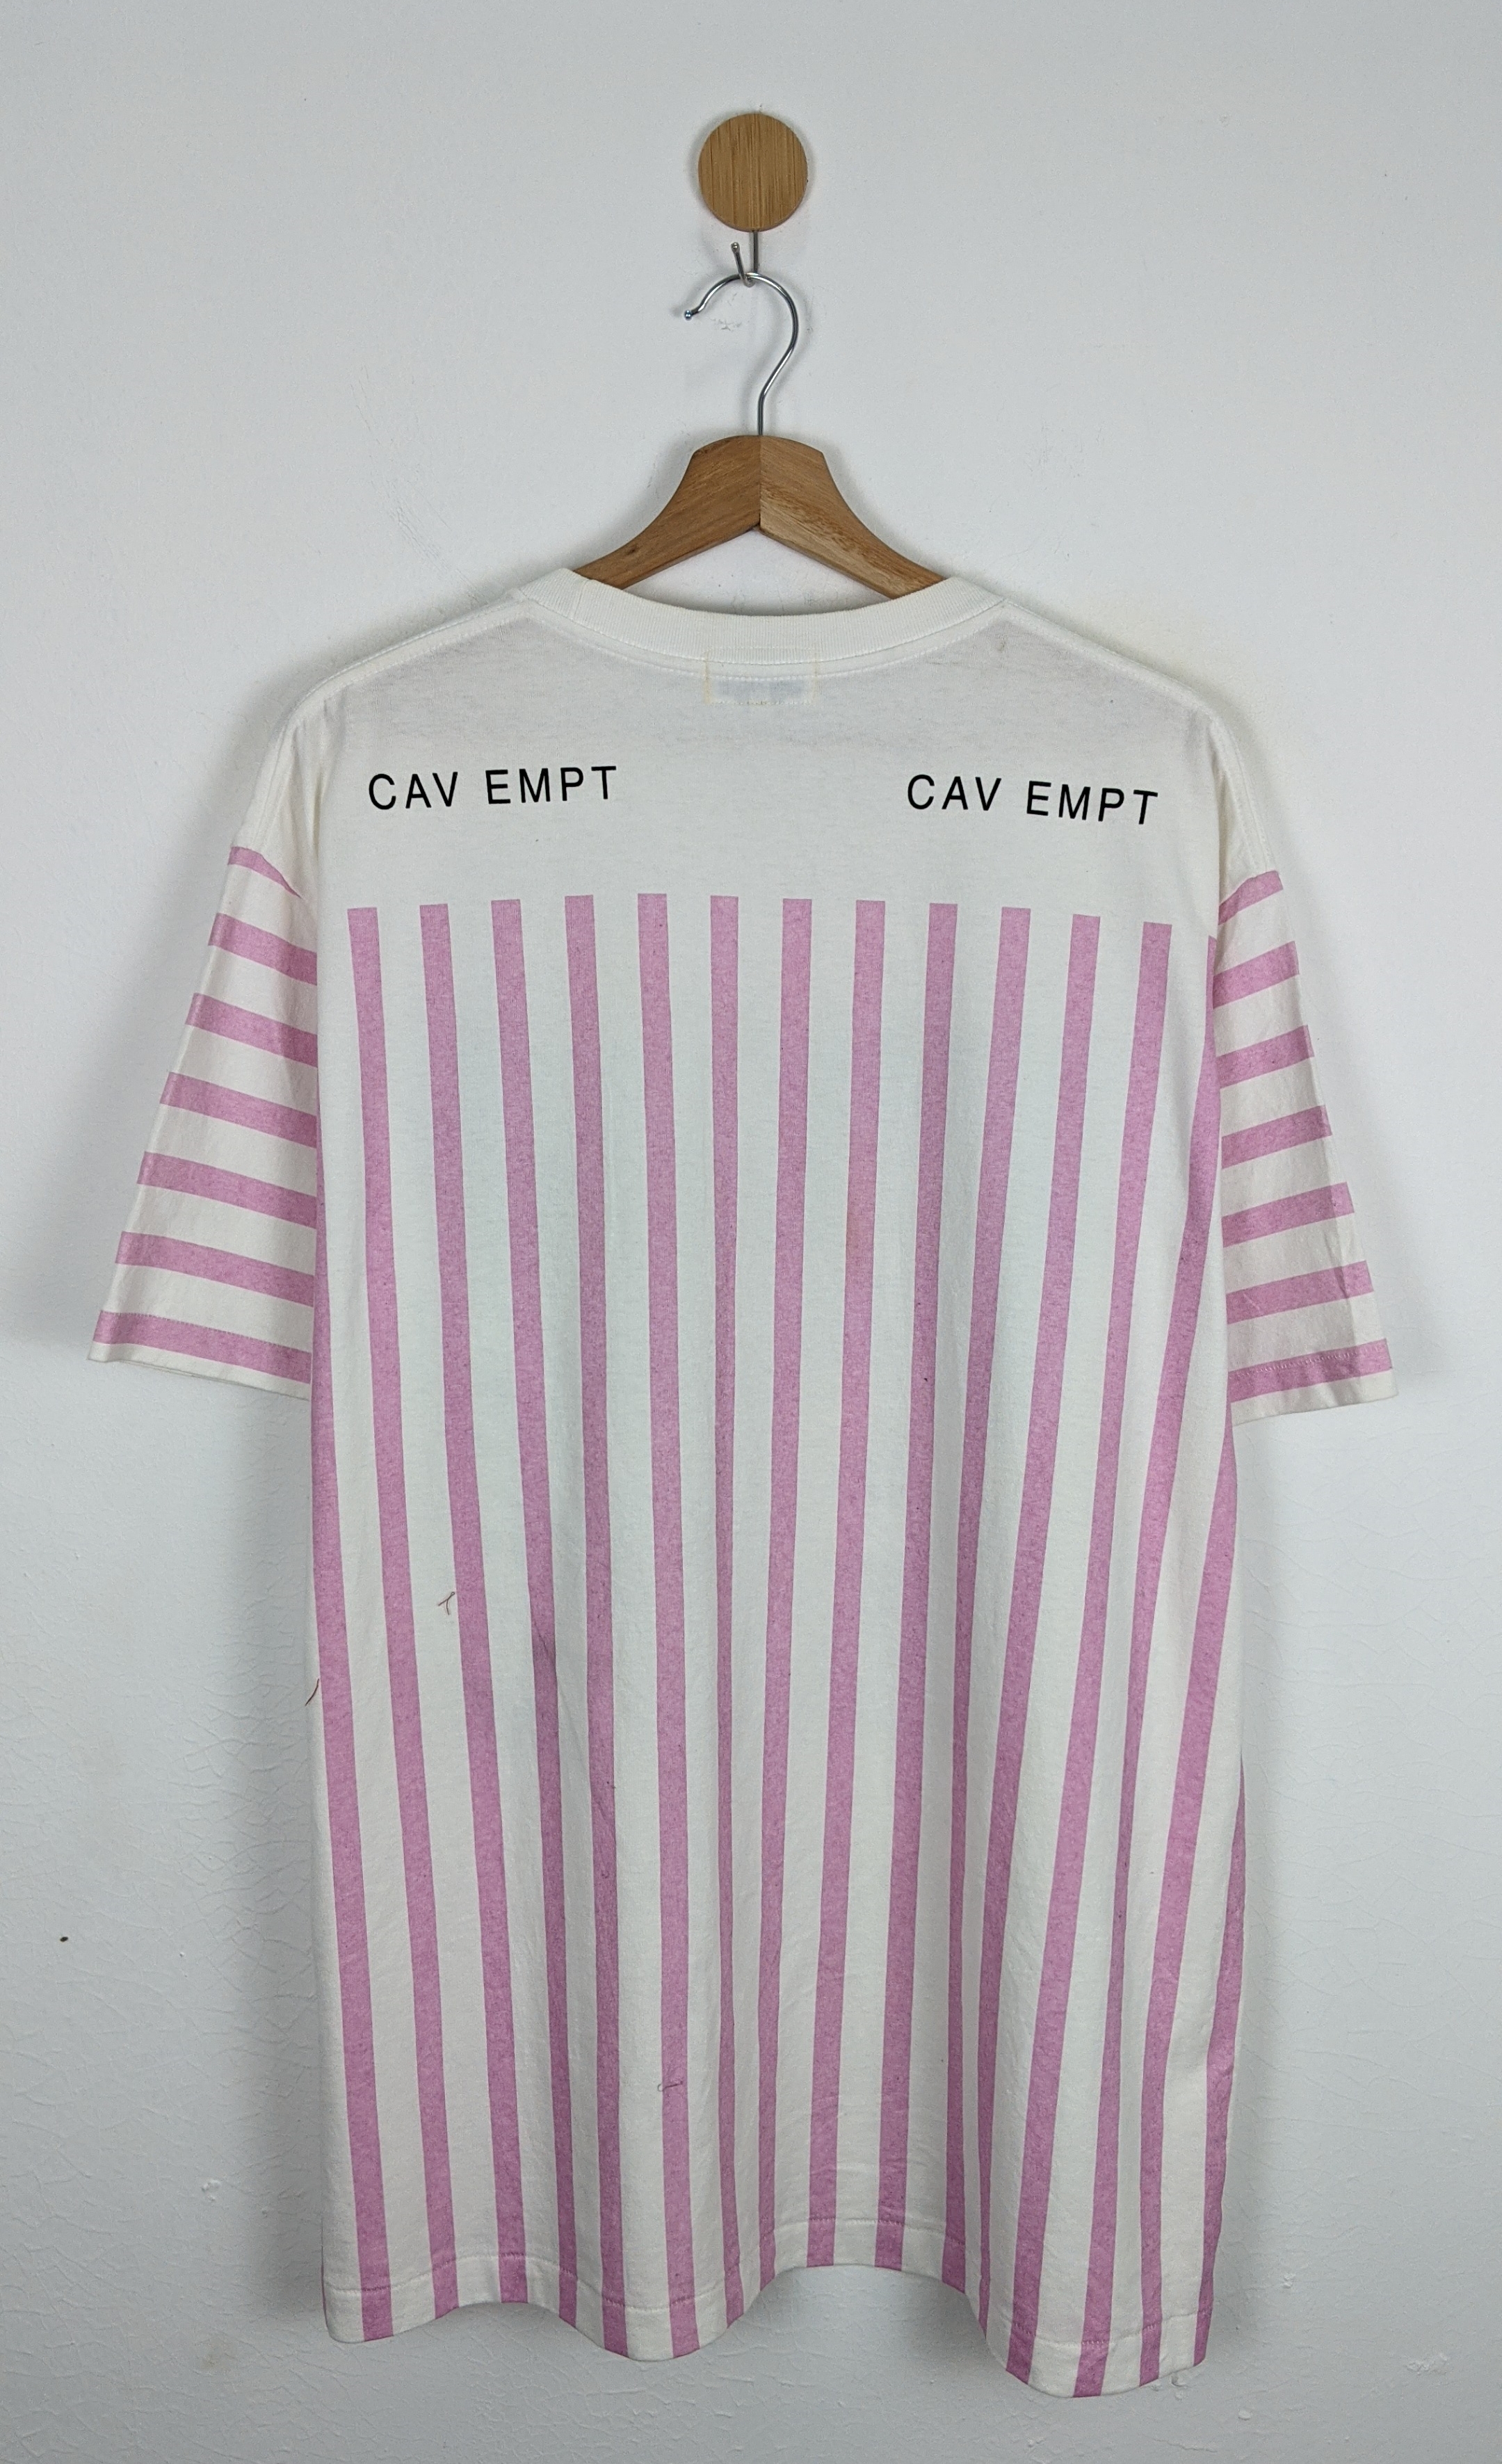 Cav Empt Low Cost Business shirt - 2